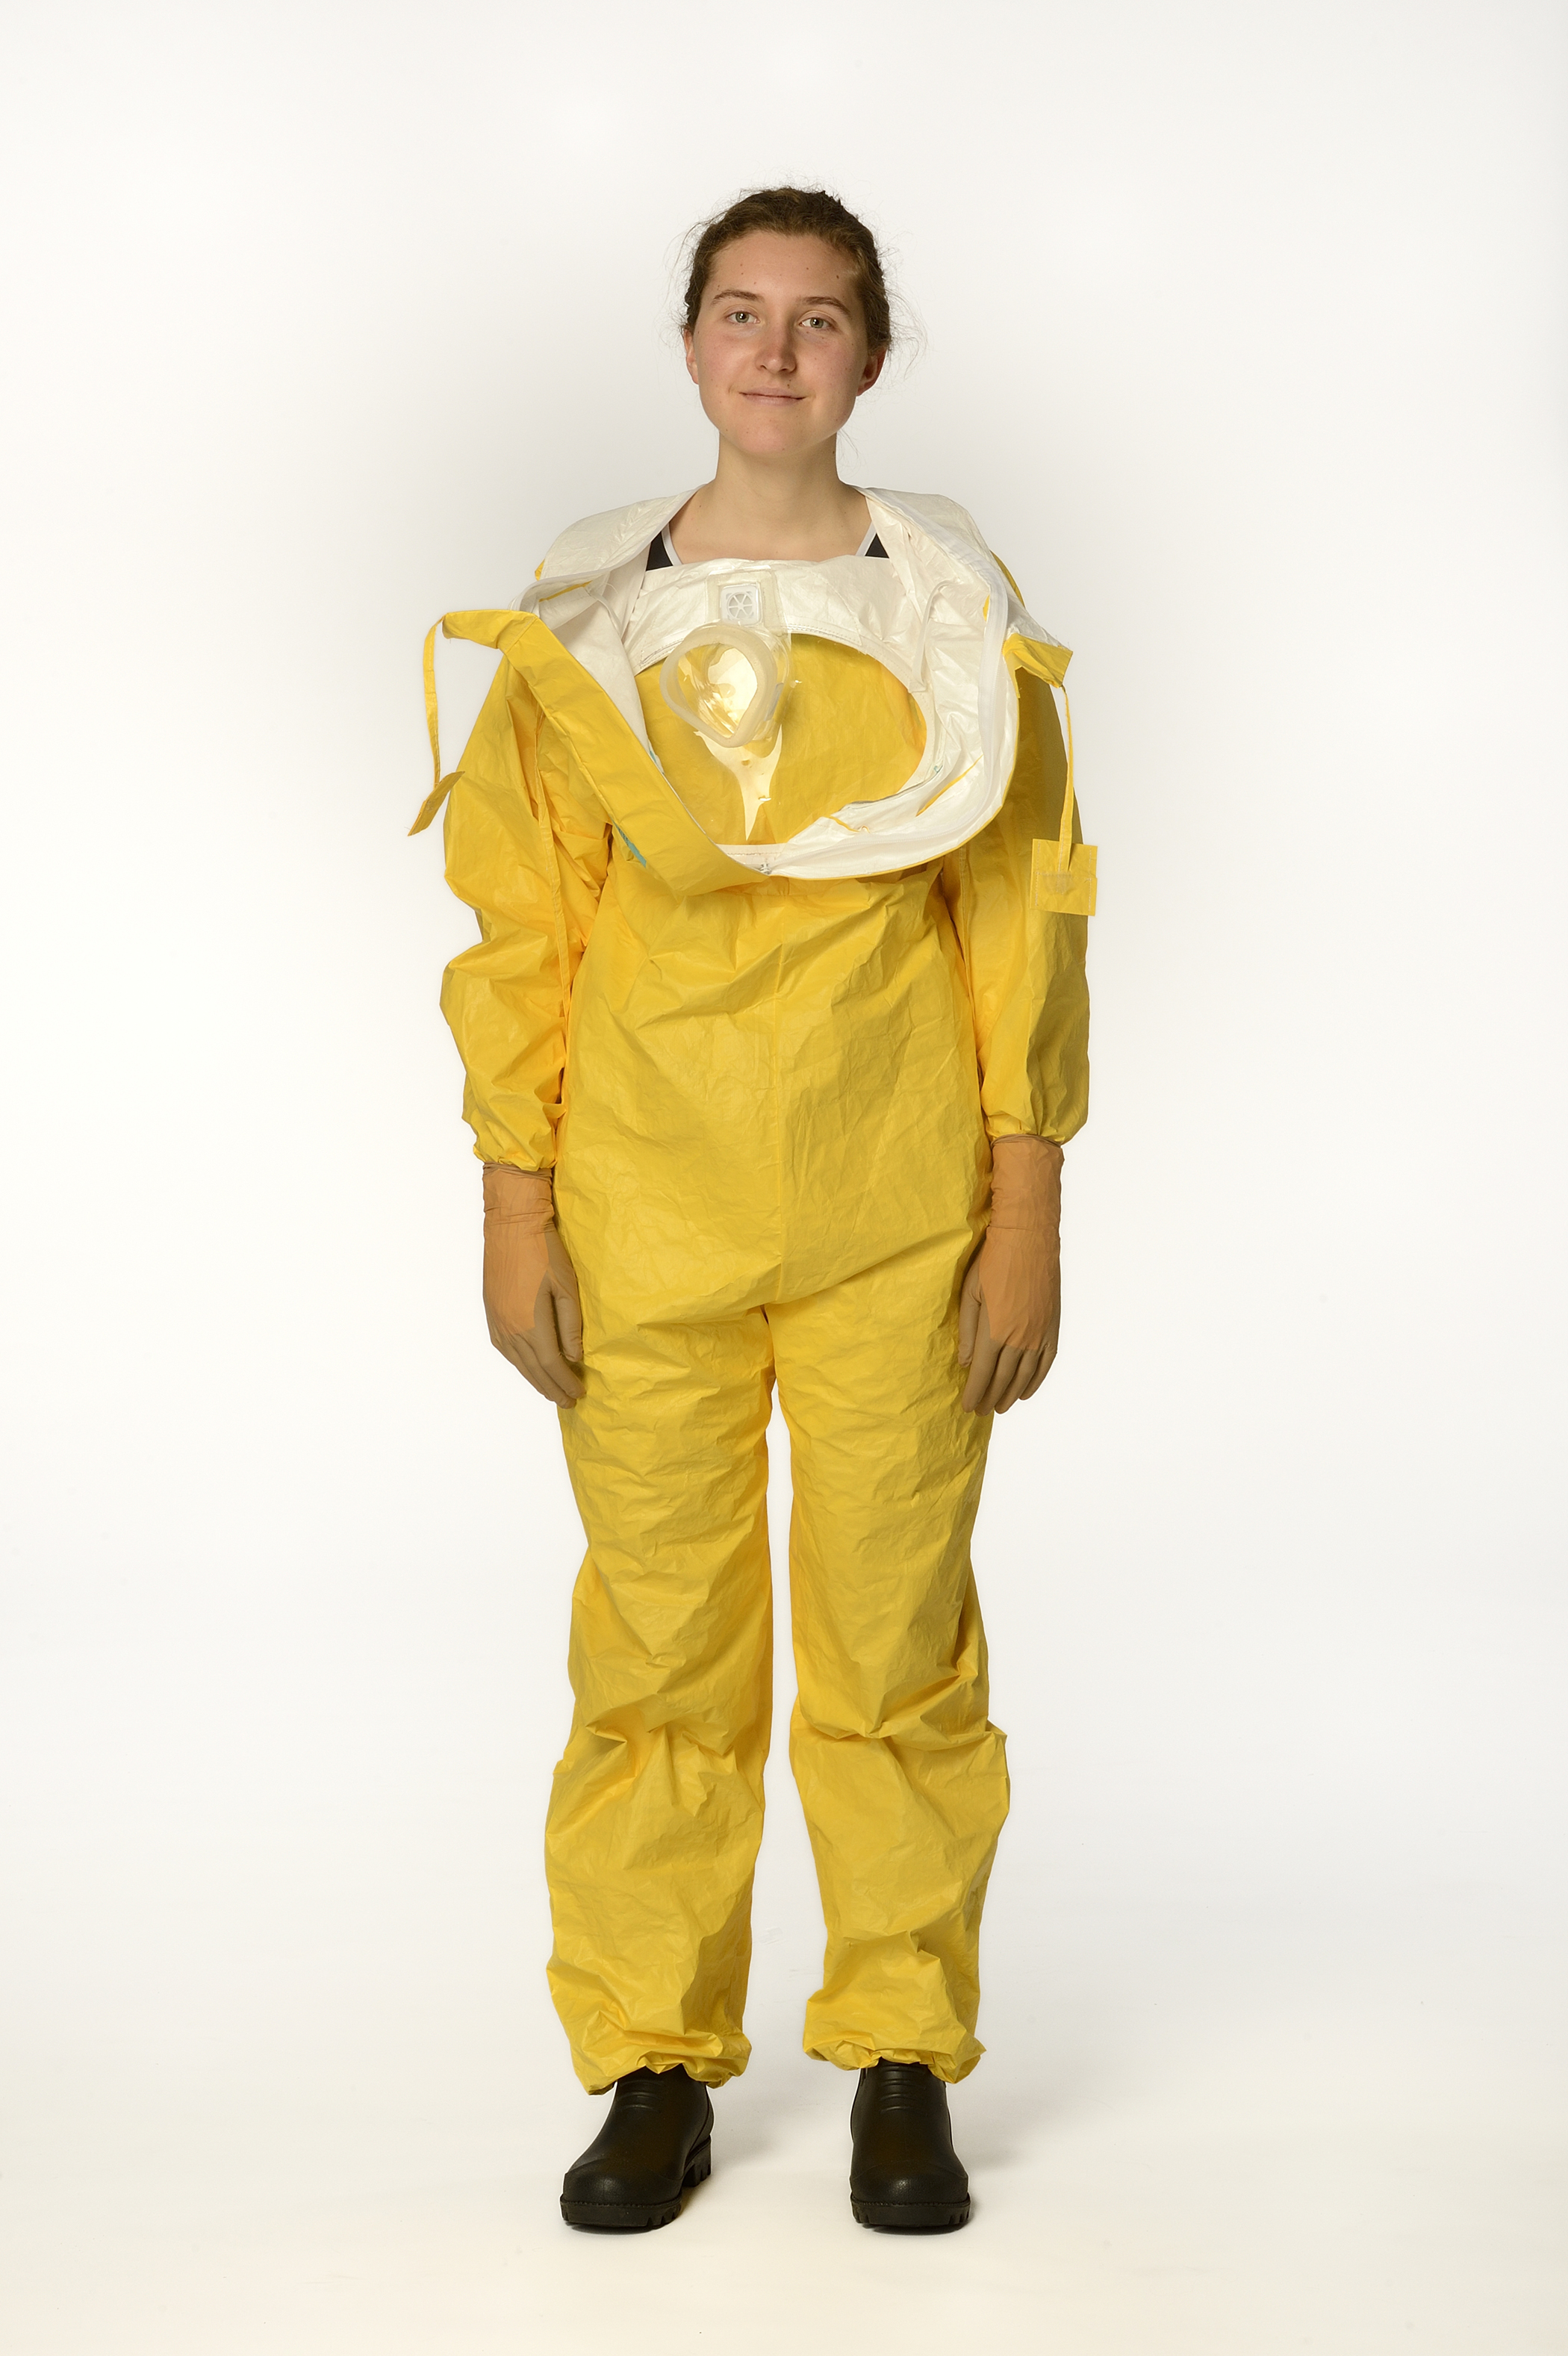 Ebola Protective Suit Prototype